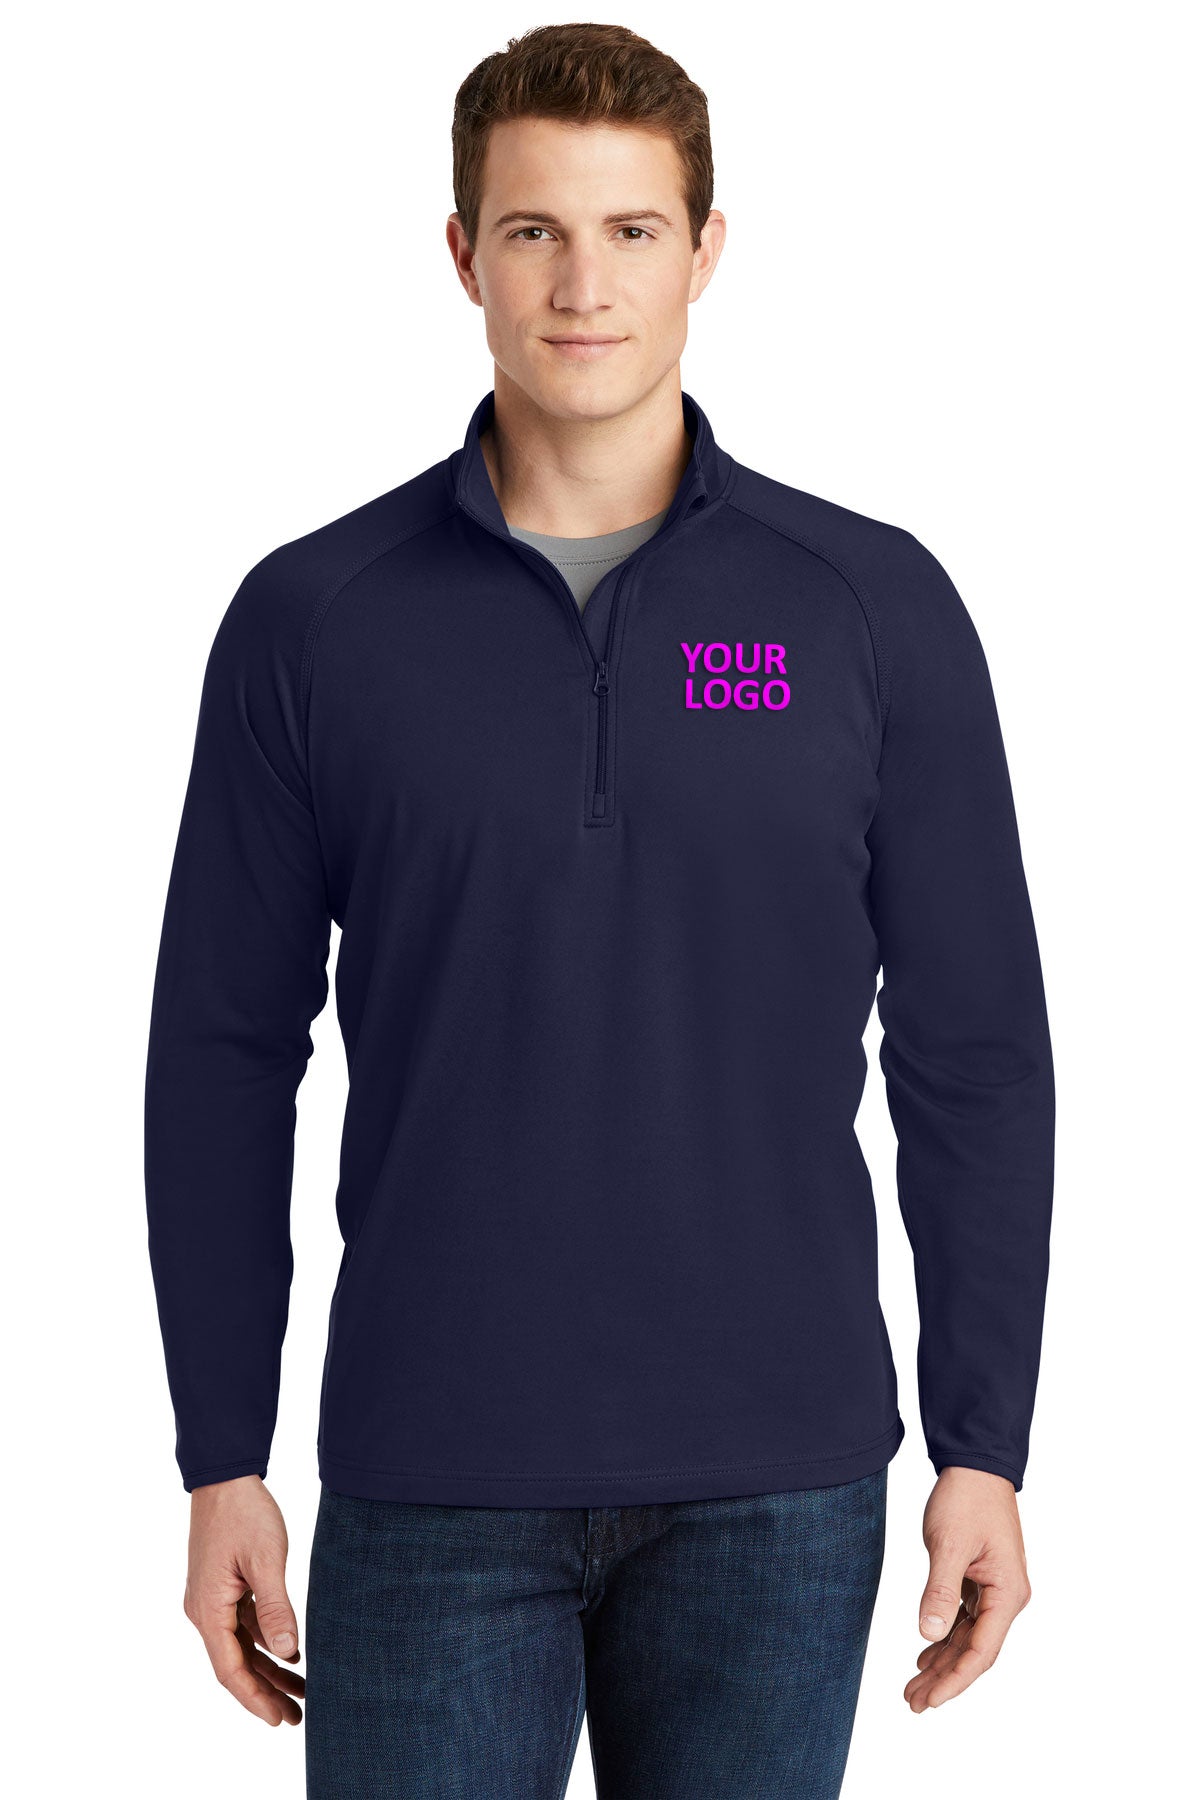 Sport-Tek True Navy ST850 embroidered sweatshirts for business